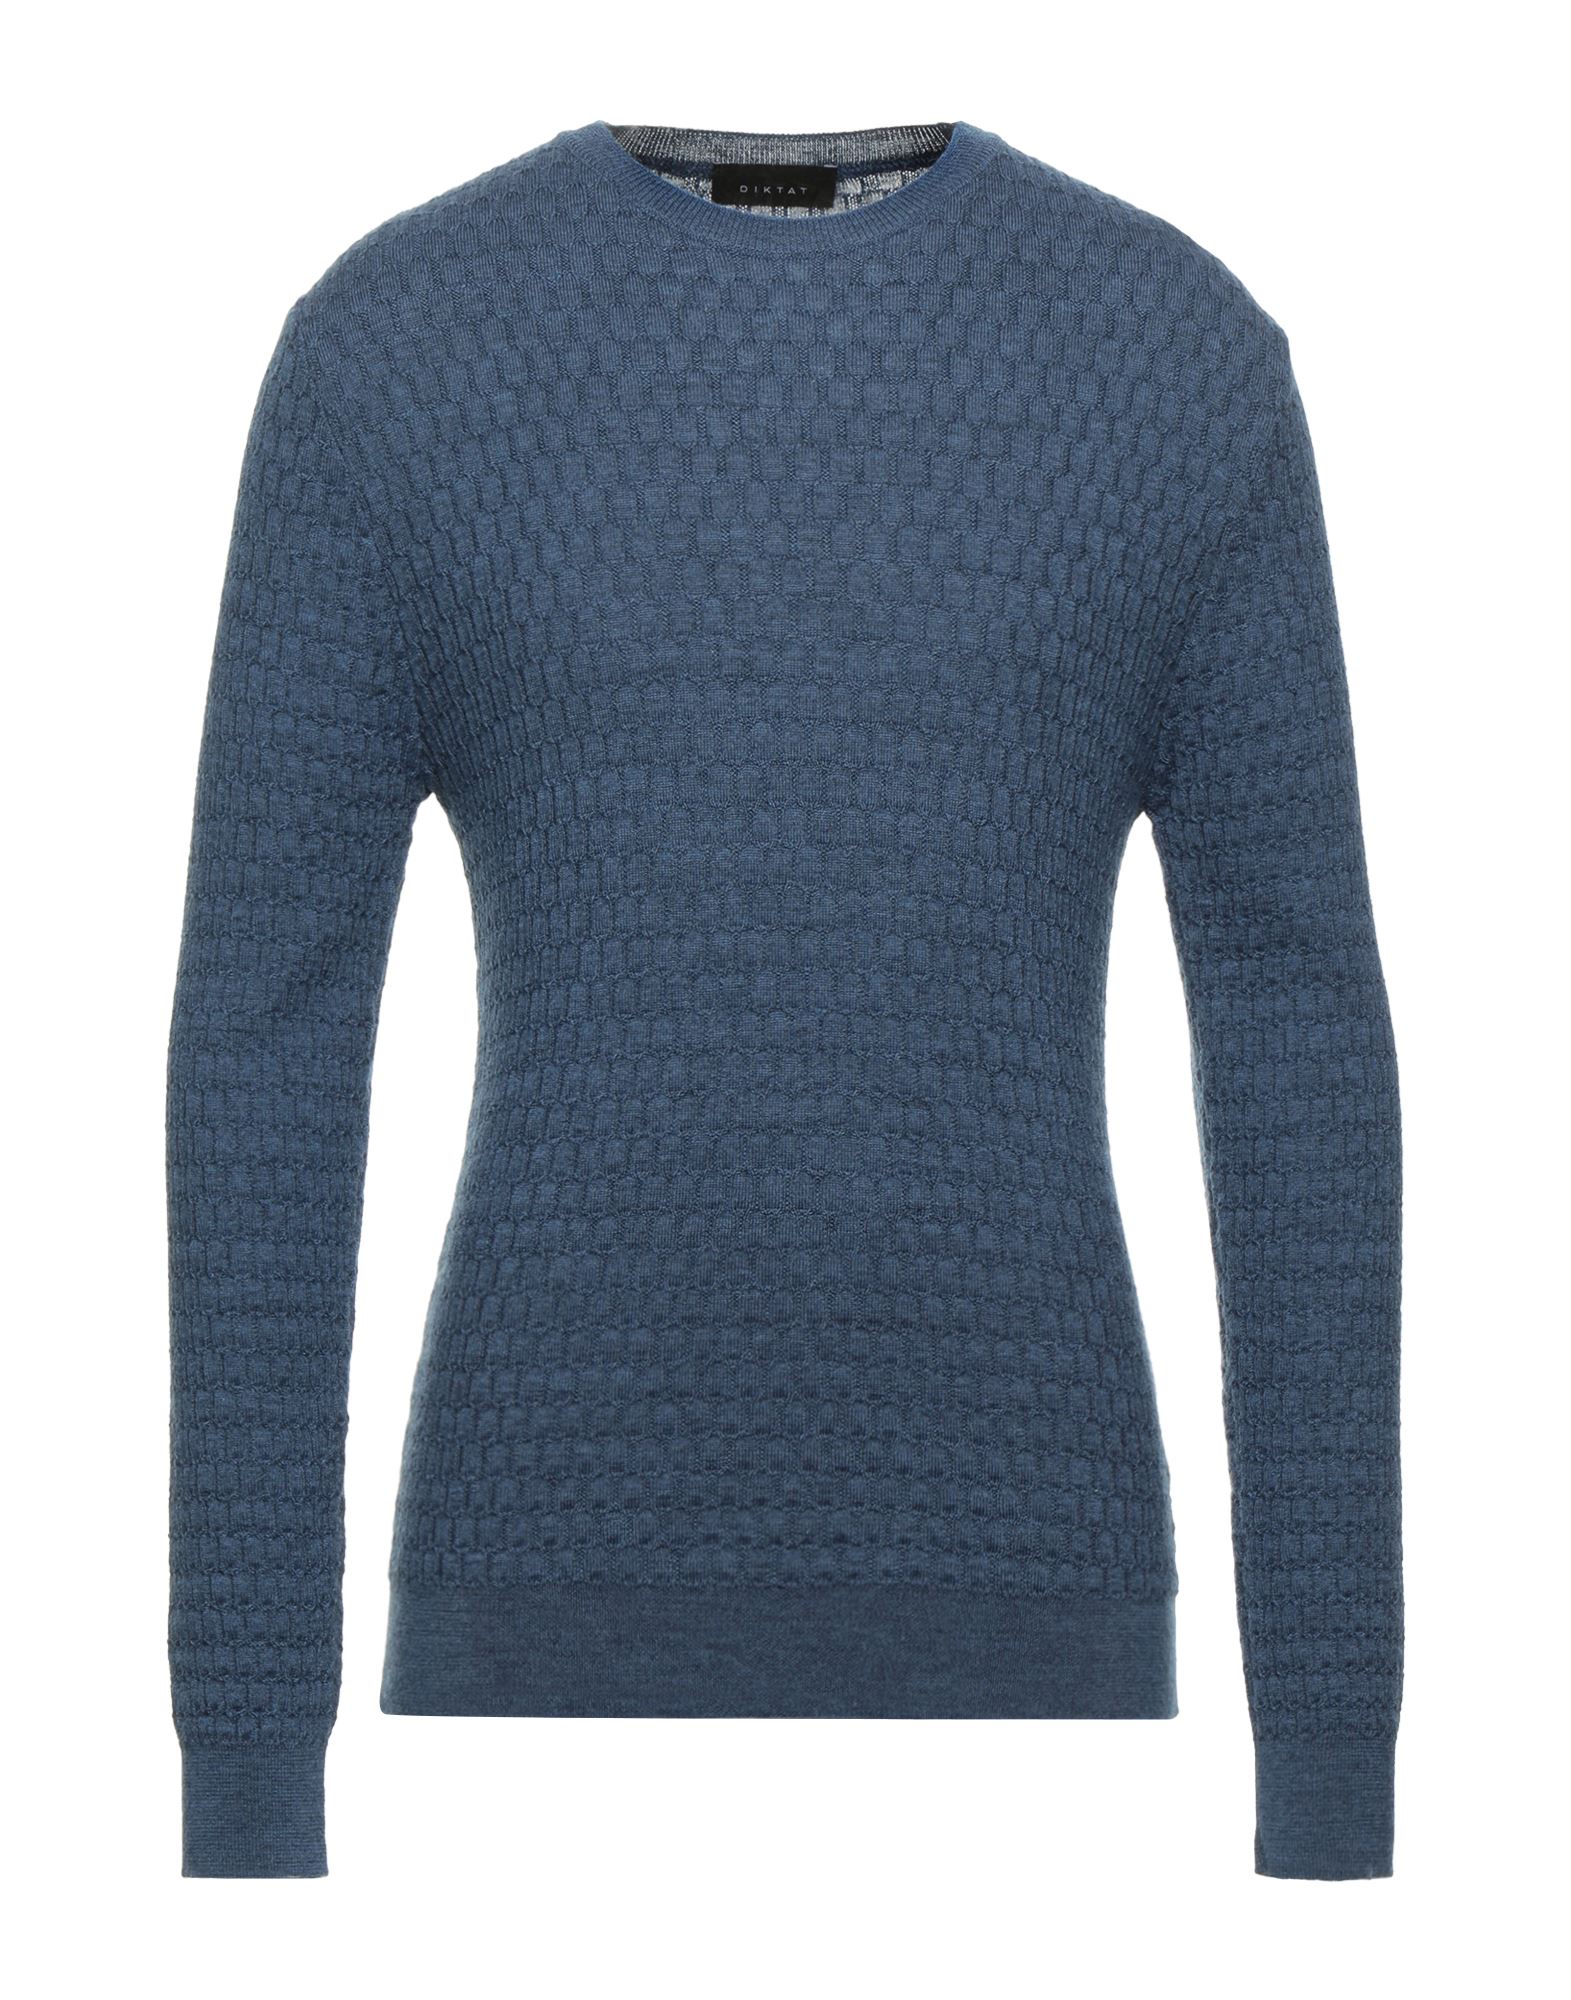 DIKTAT Sweaters | Smart Closet